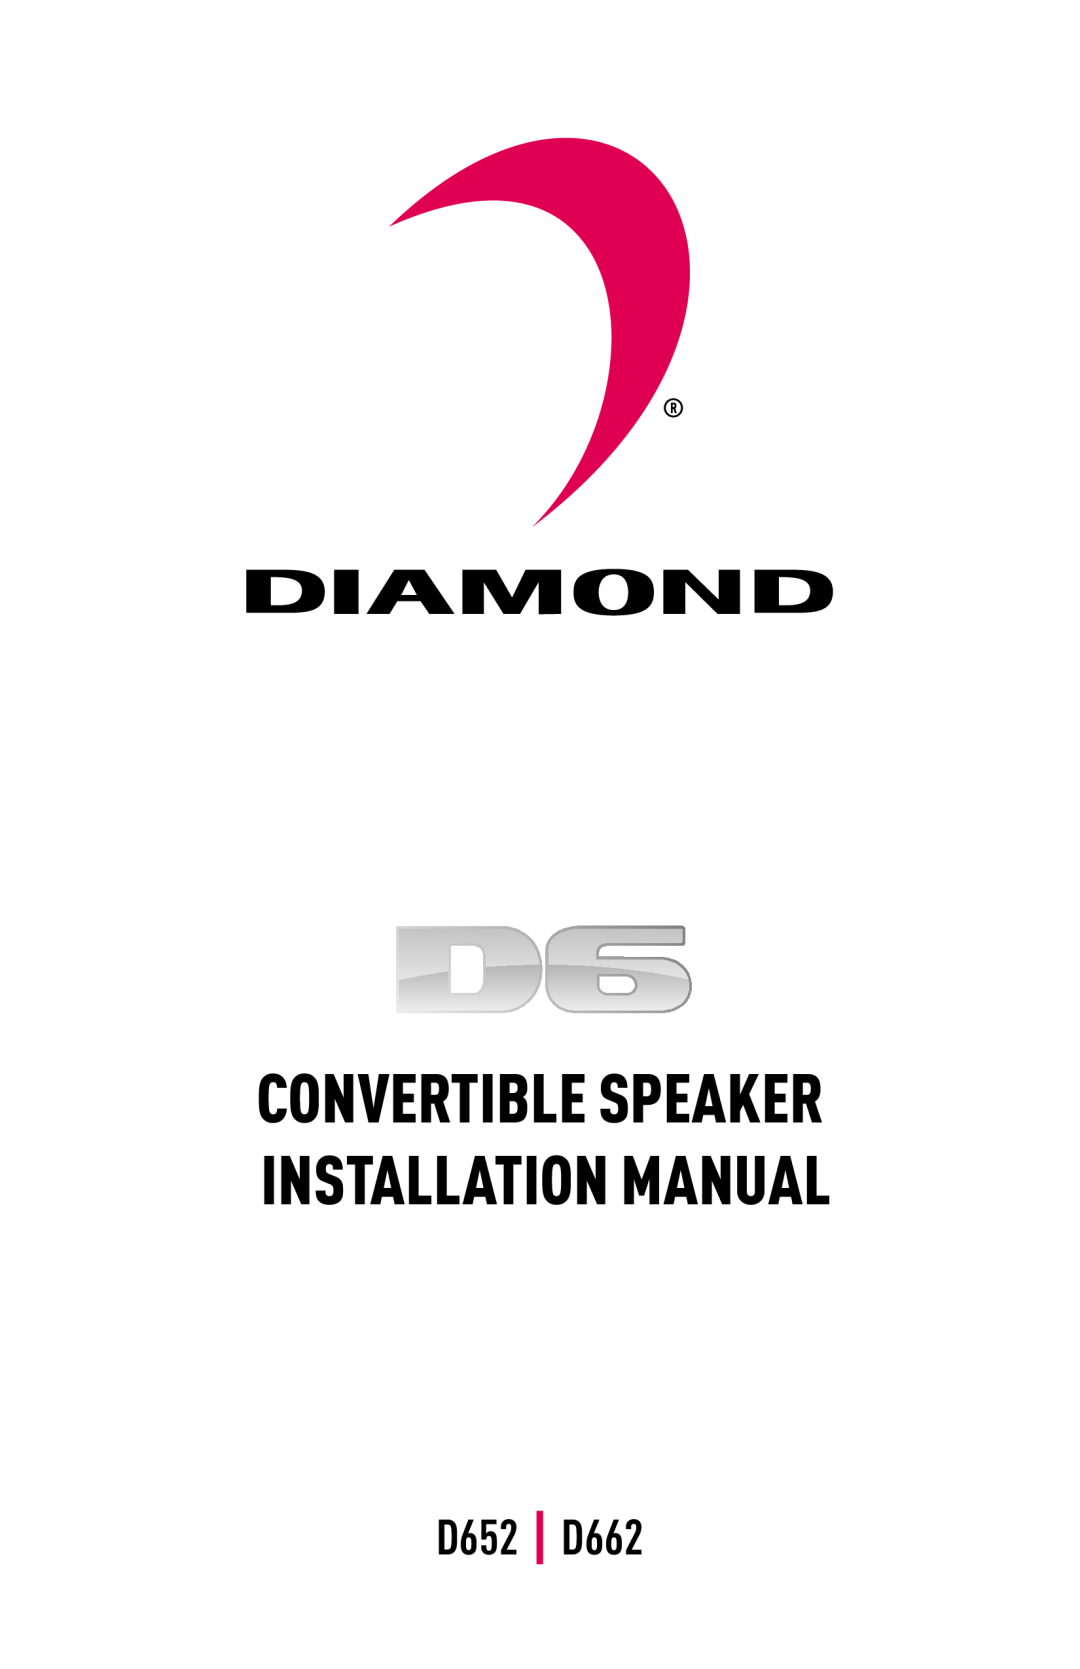 Diamond installation manual D652 D662, Convertible Speaker Installation Manual 